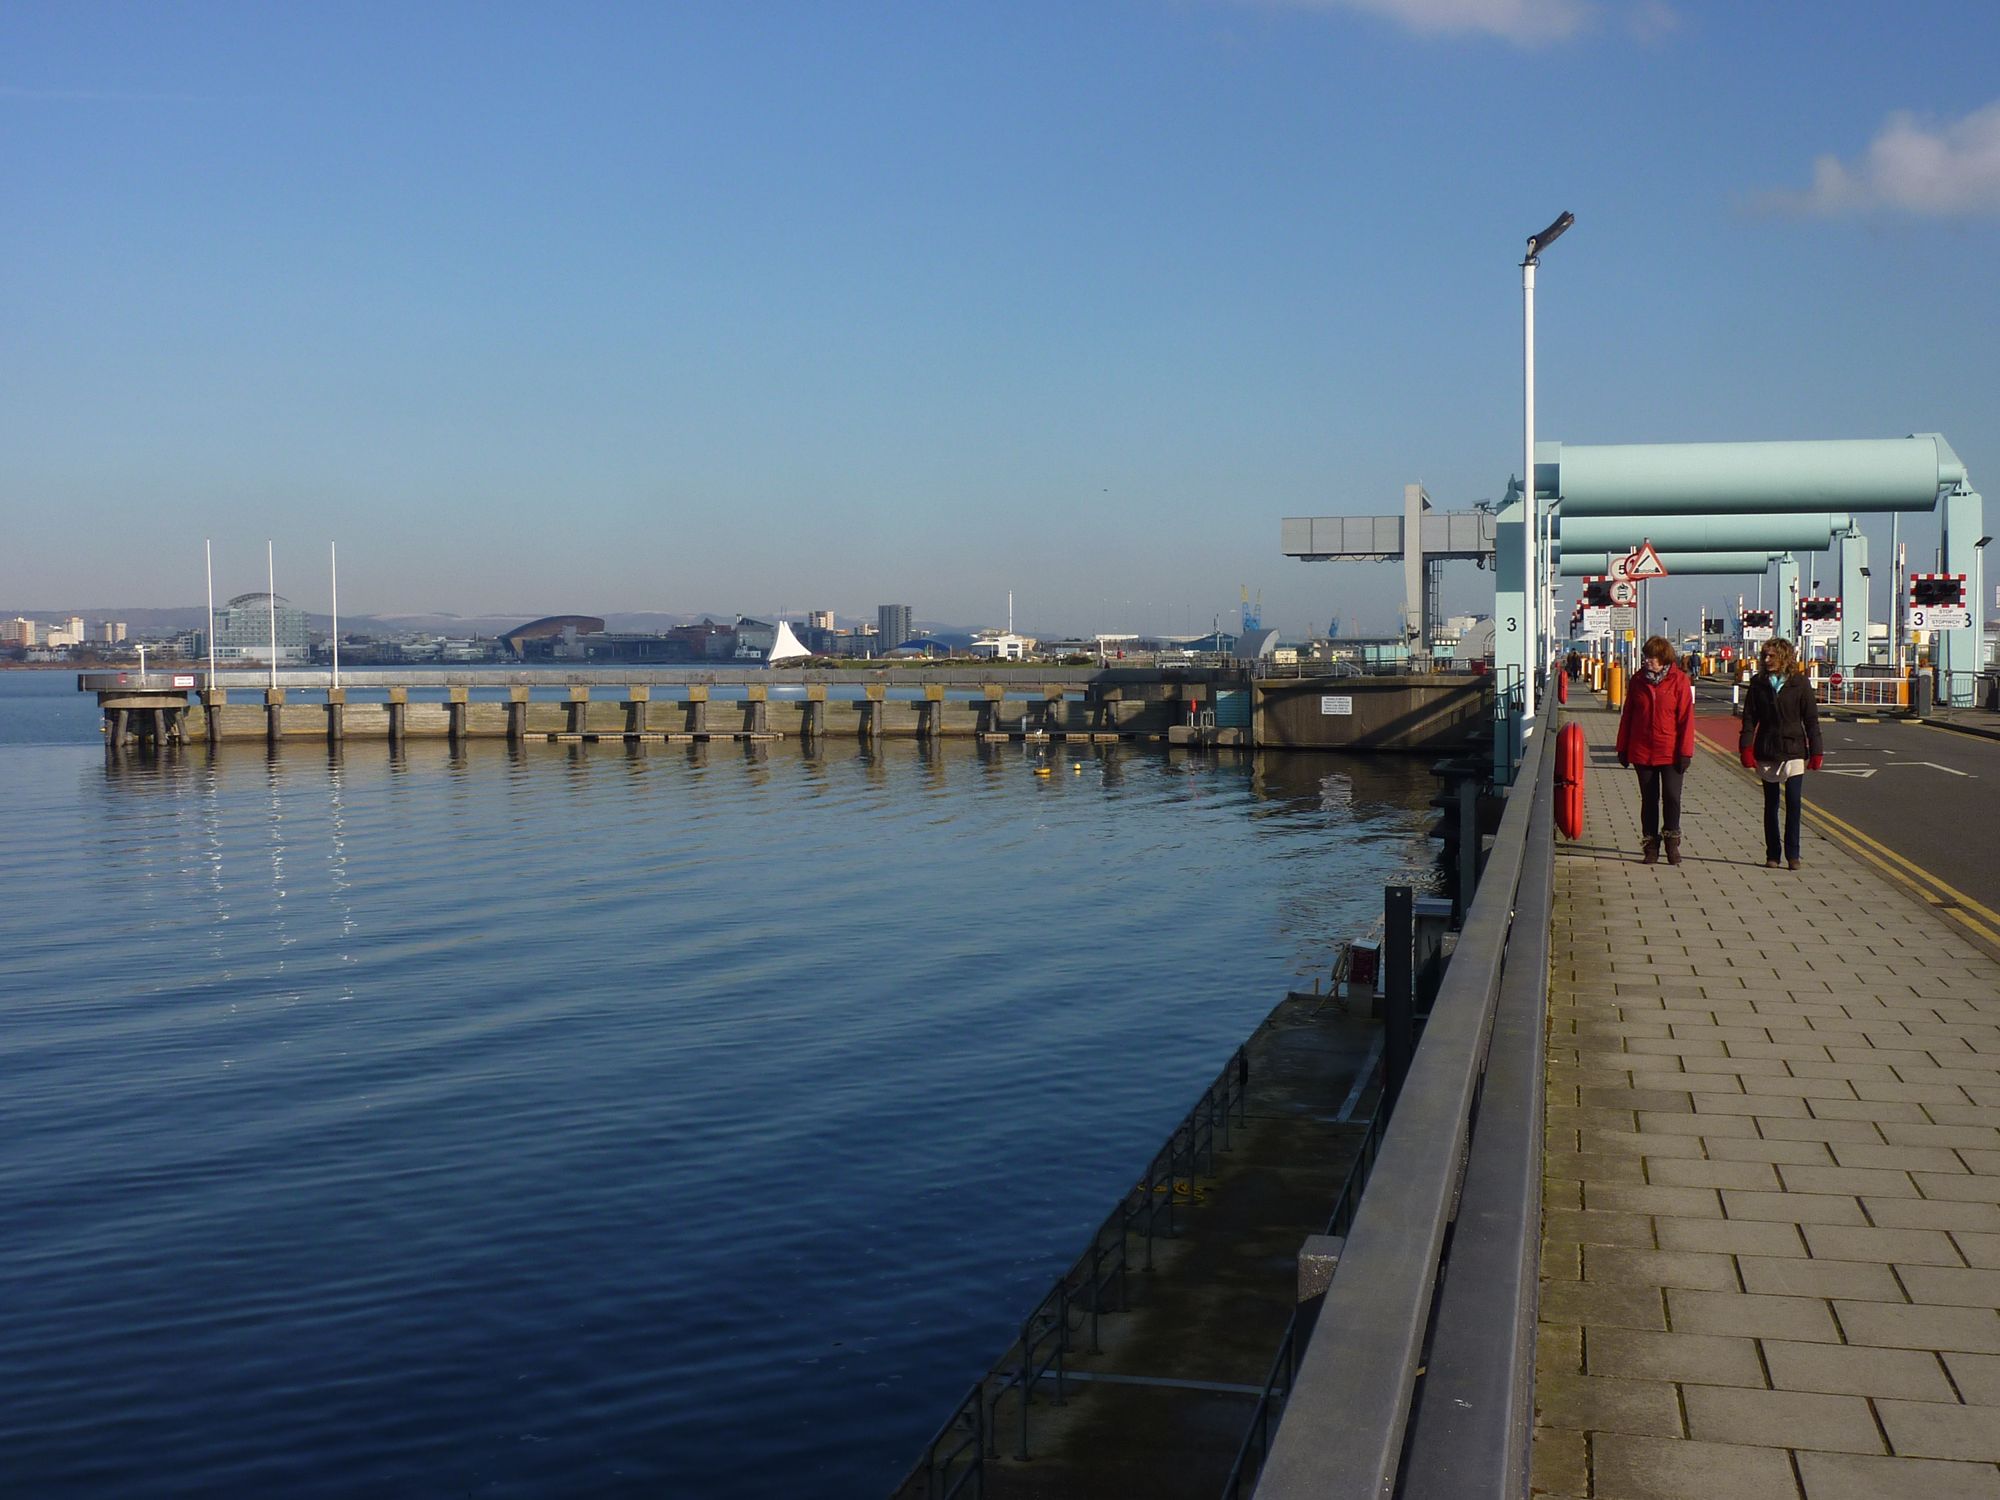 The Barrage – Cardiff Bay